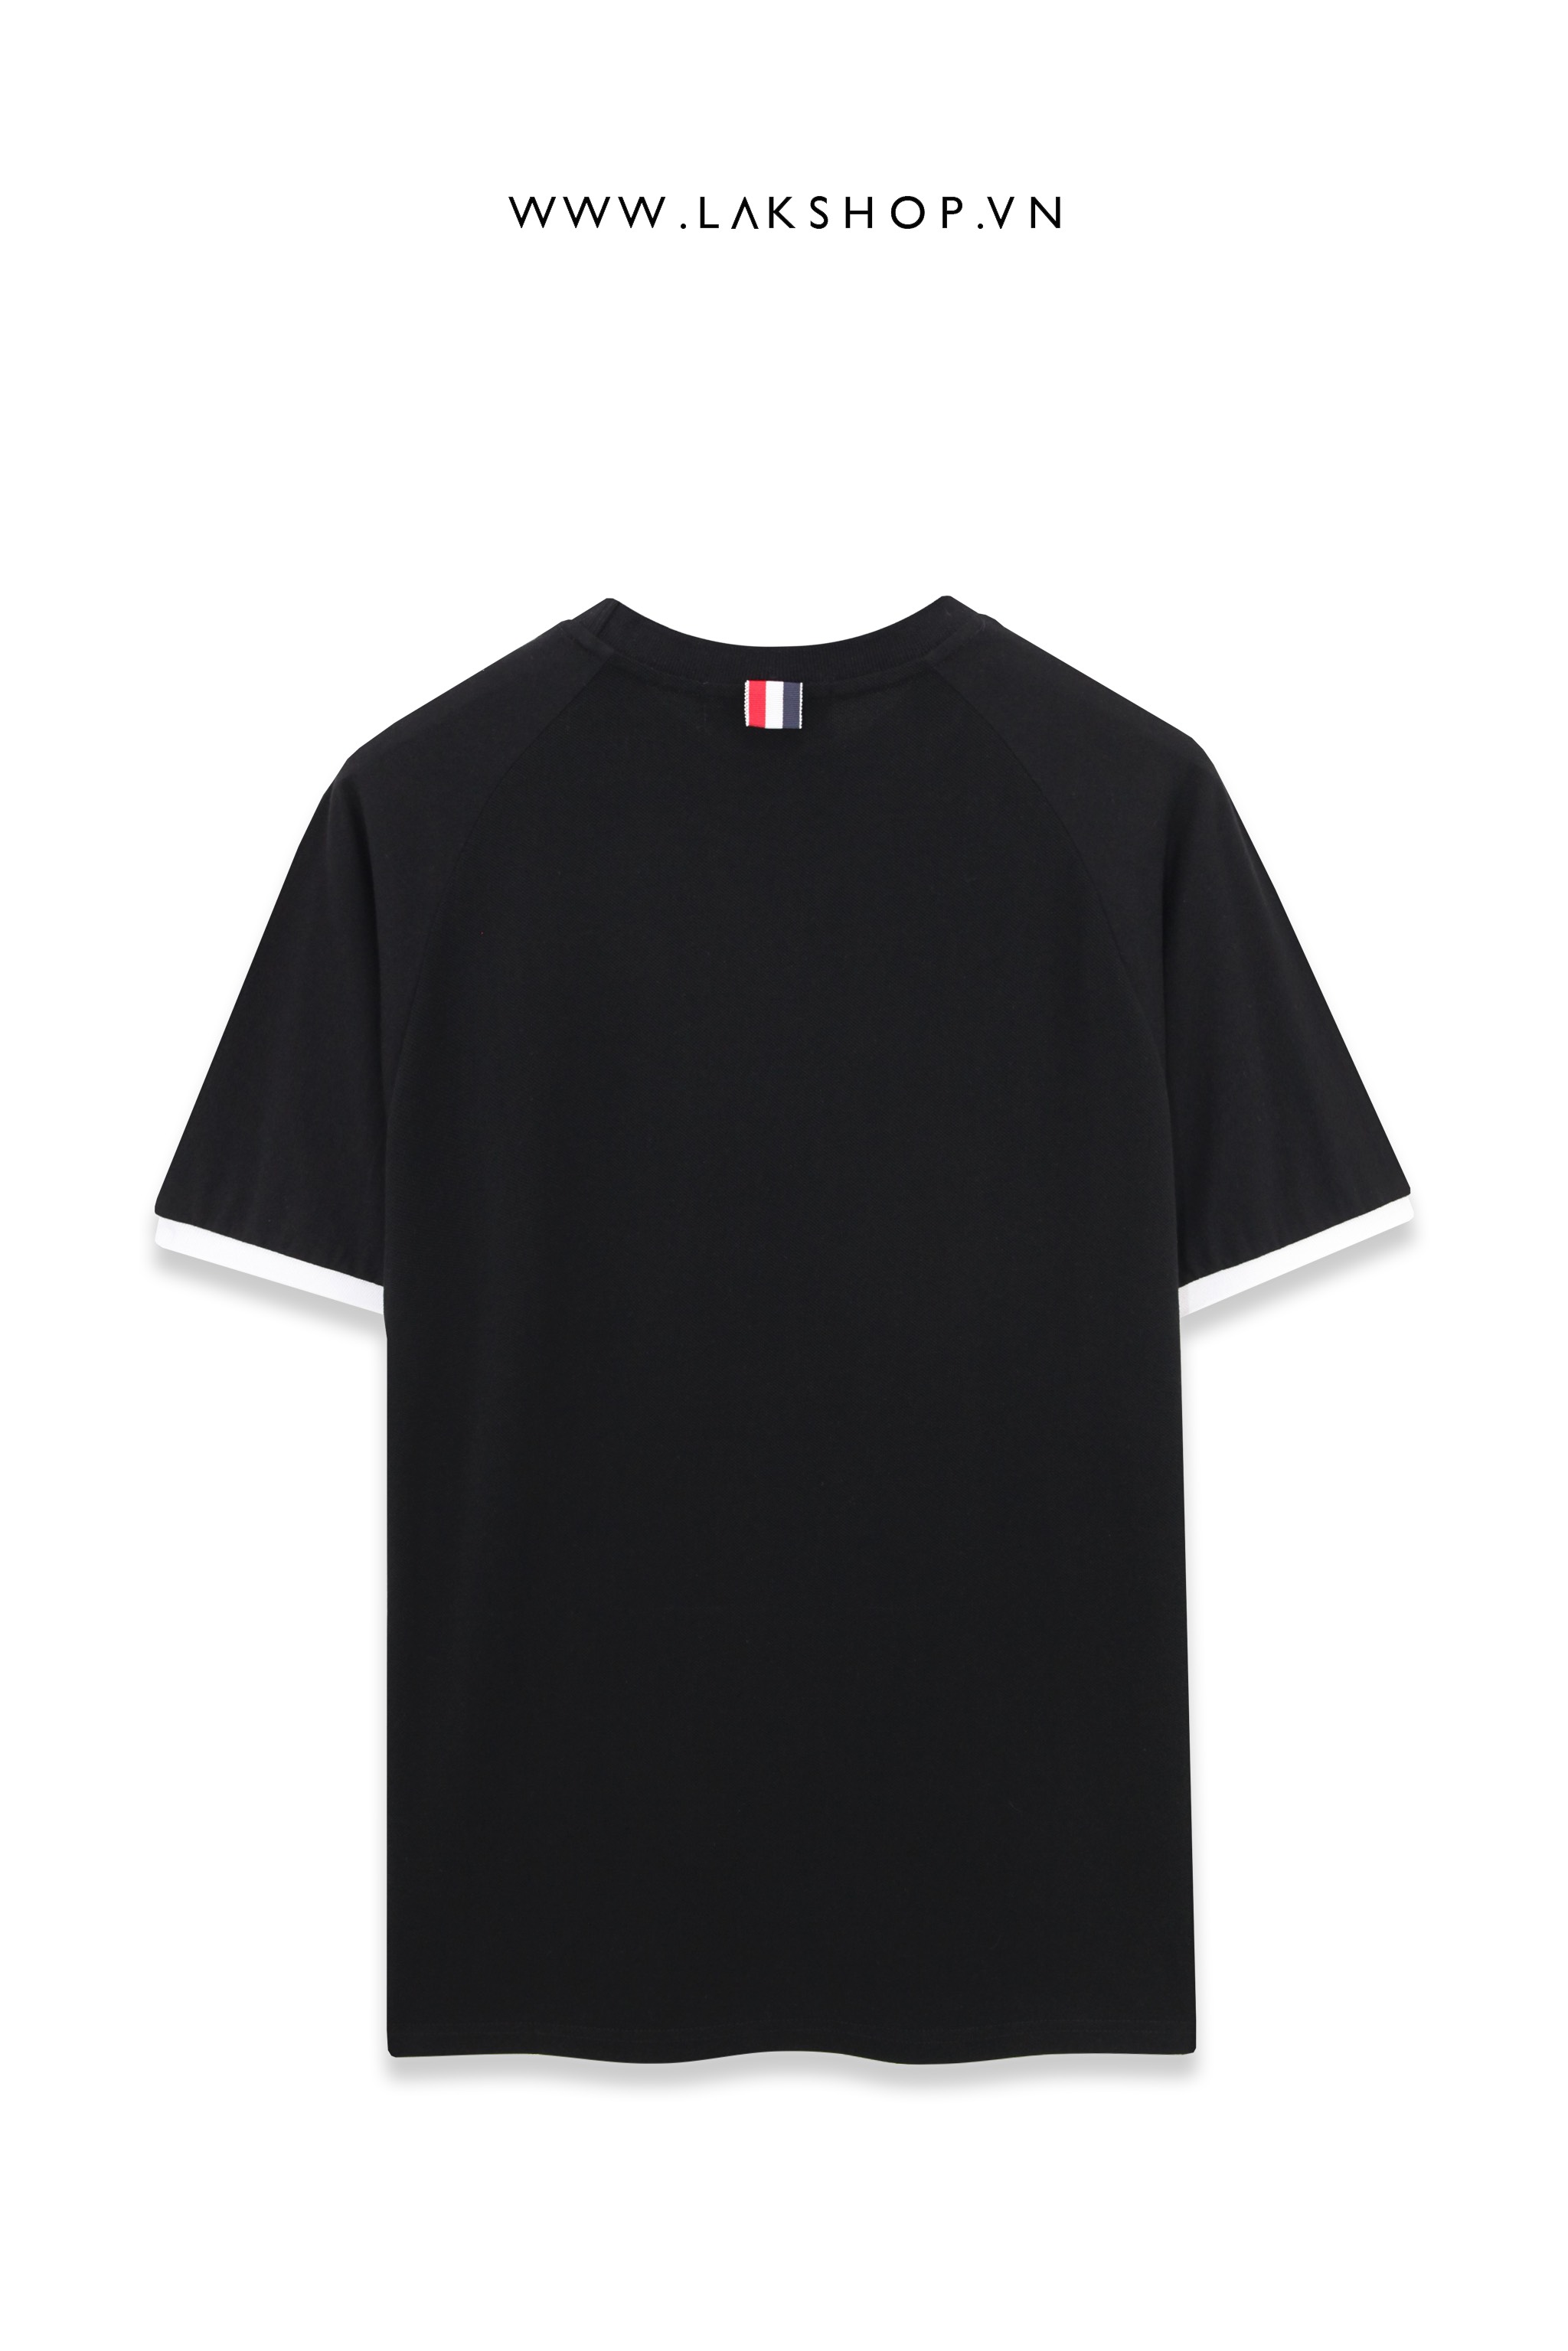 Th0m Br0wne Striped Shoulder in Black T-Shirt cx3